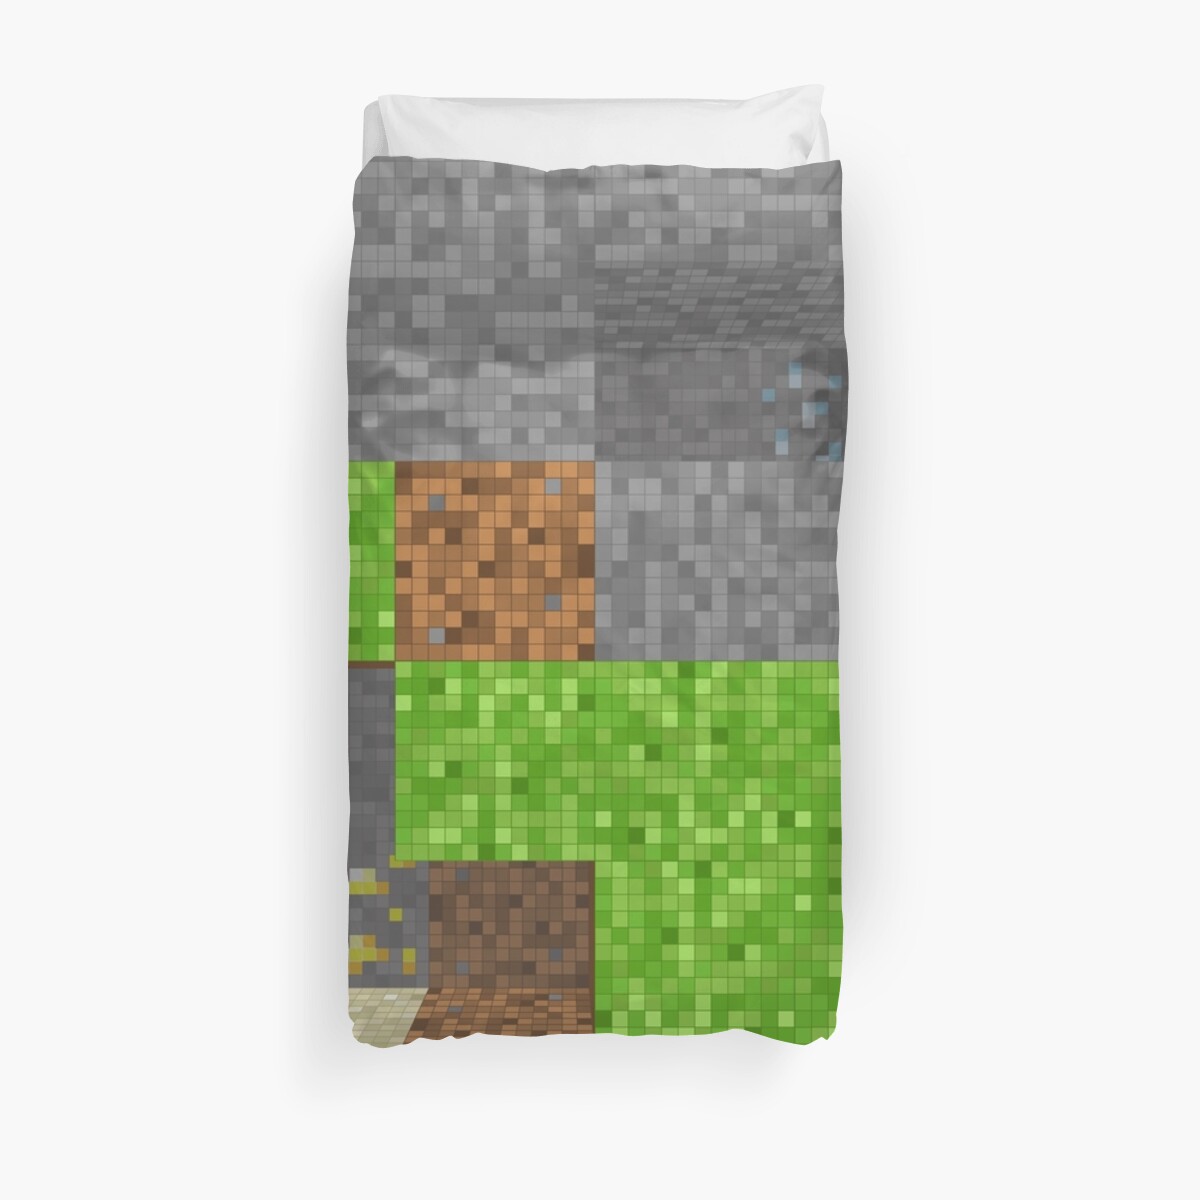 andabelart â€º Portfolio â€º Minecraft Inspired Pixel Art Play Area